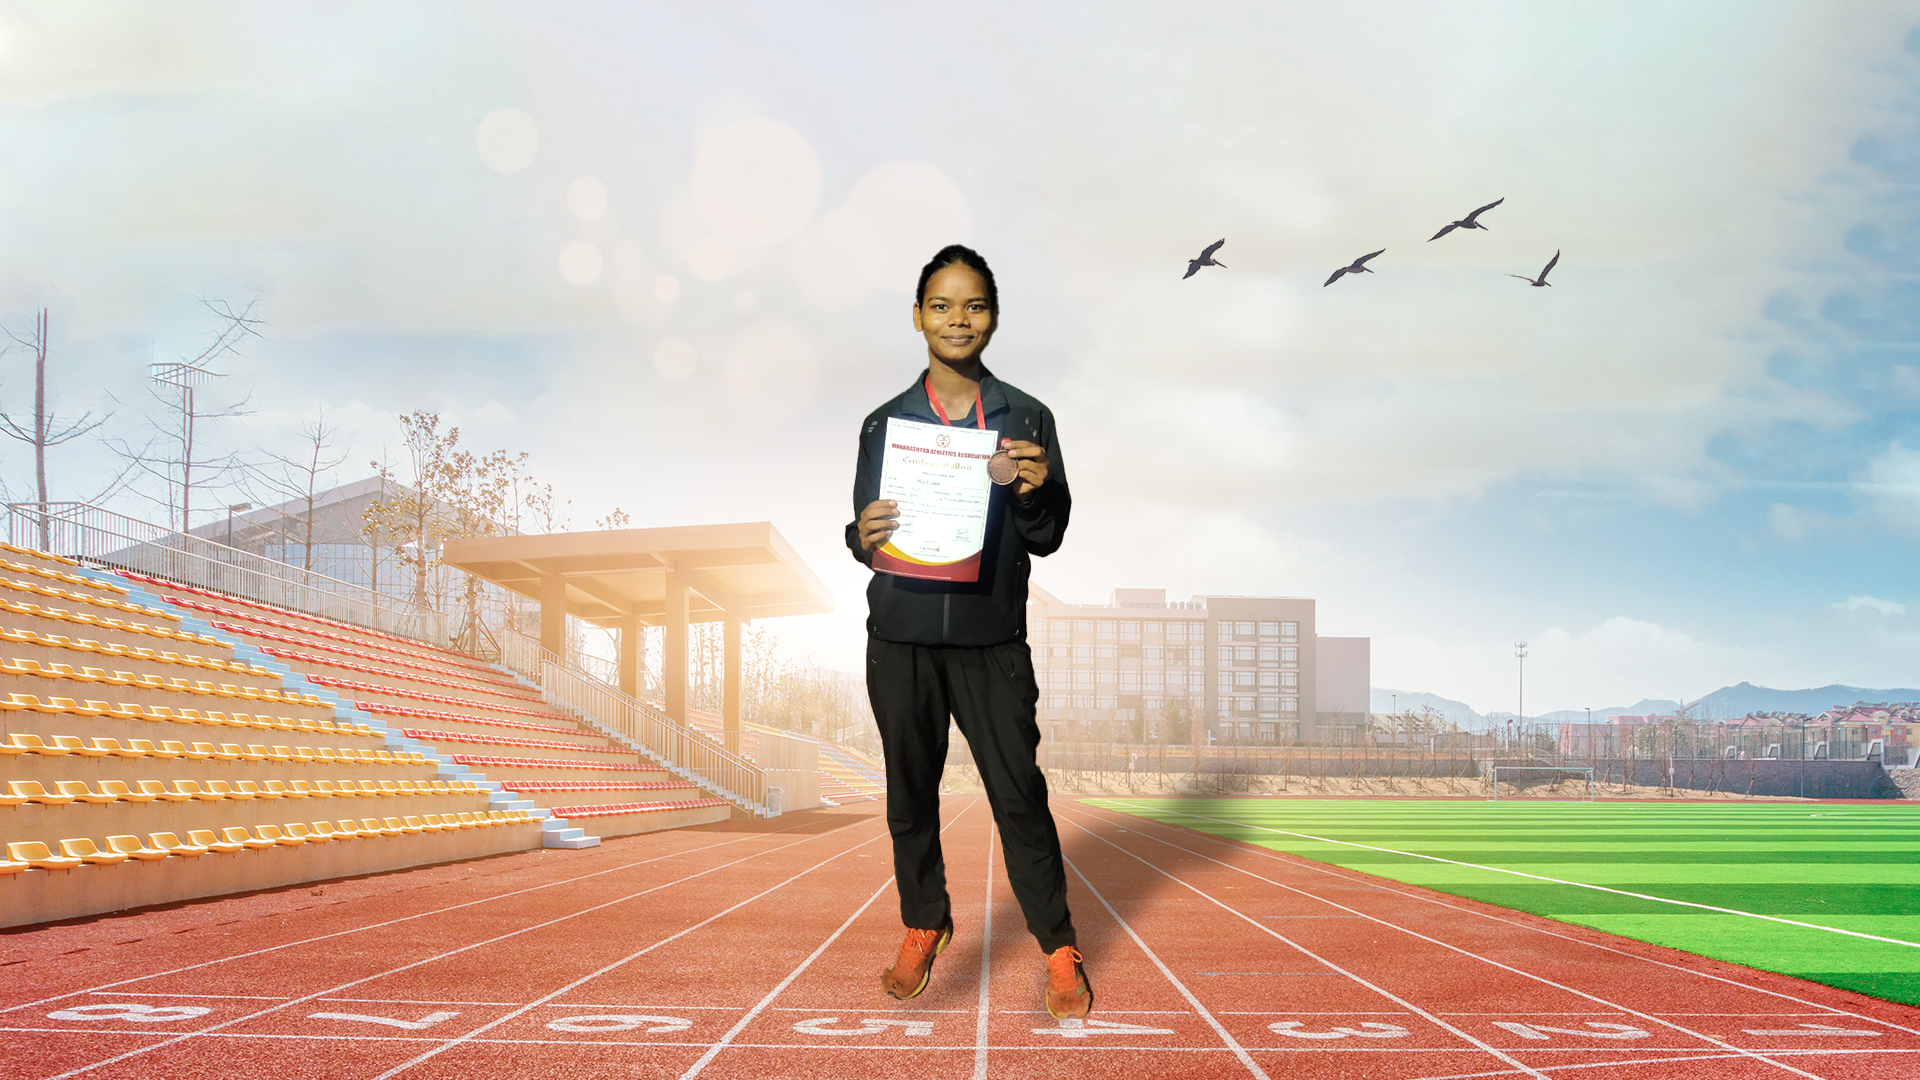 Essar-Foundation-supports-rising-athlete-Priya-Gupta-to-pursue-her-Olympic-dream